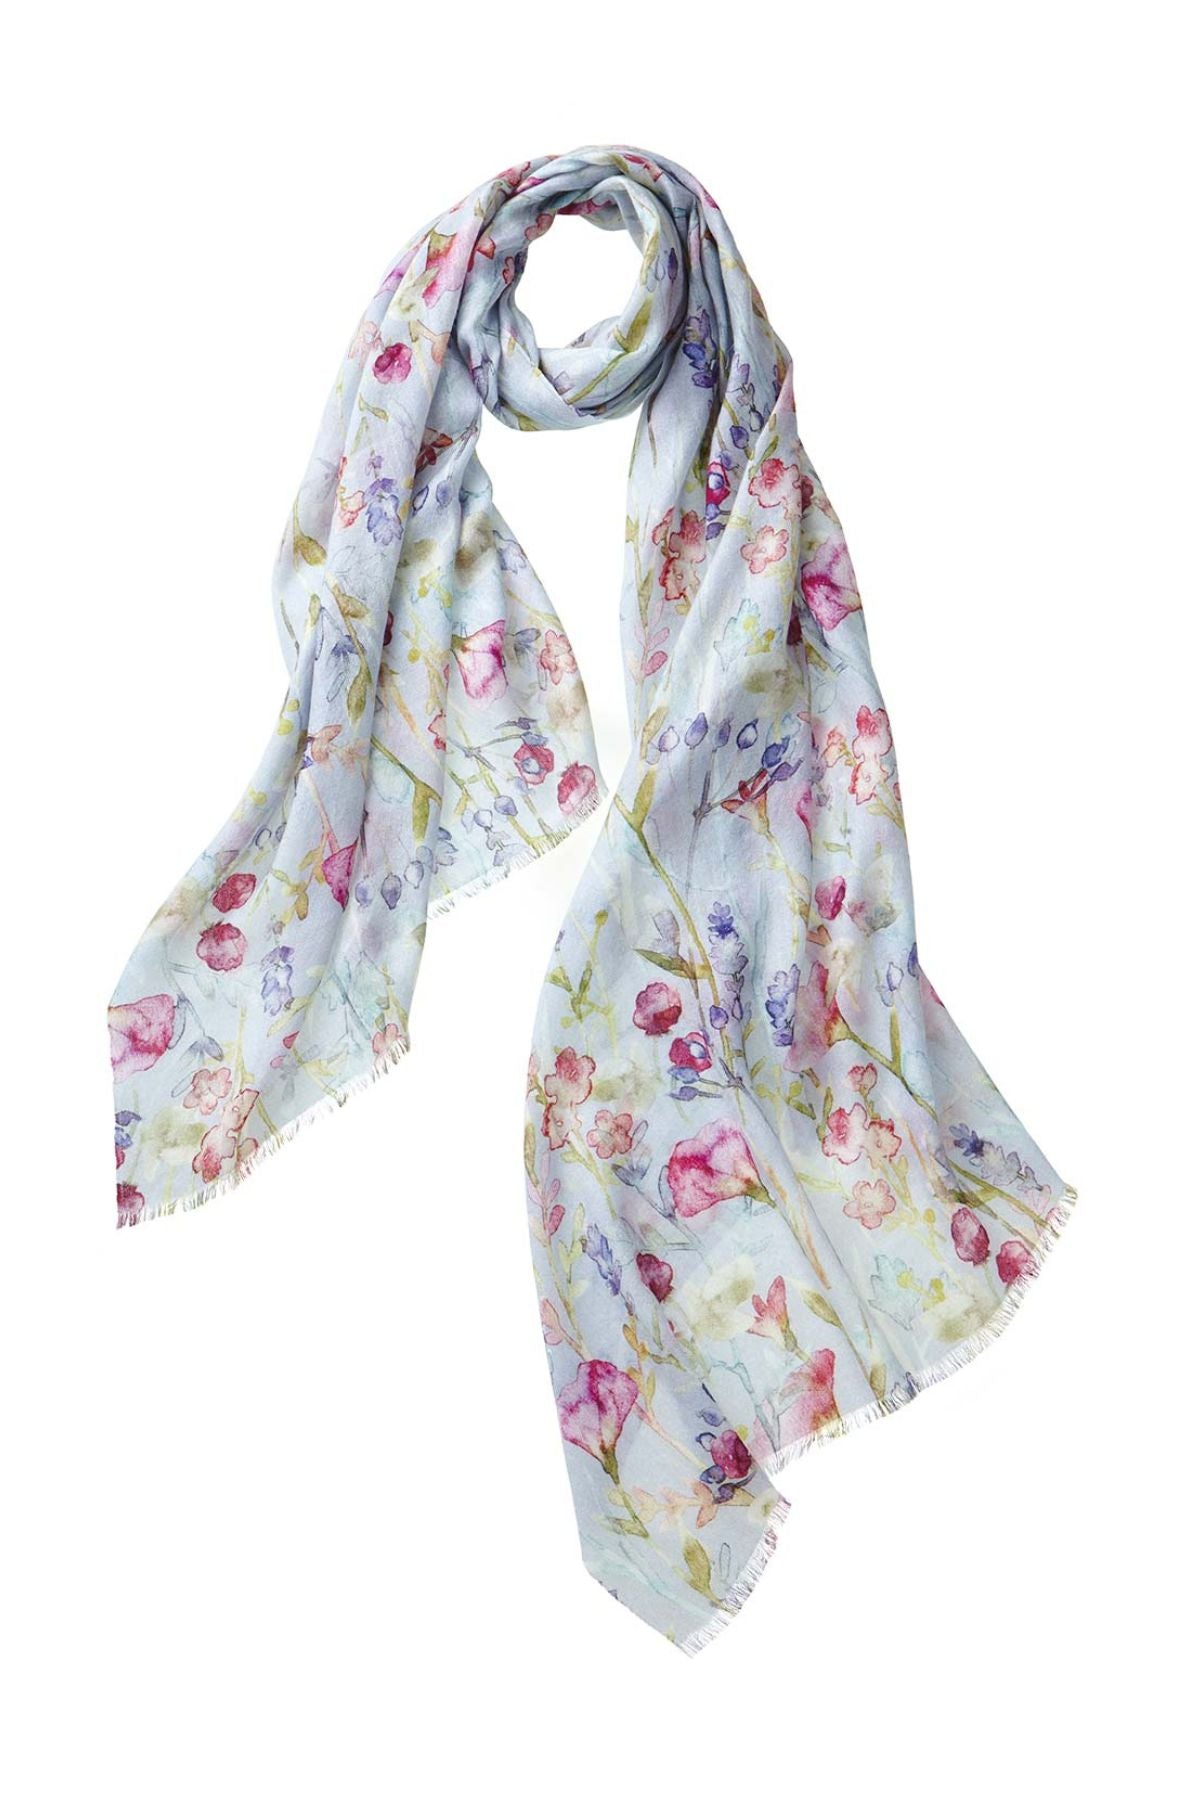 Watercolor flowers scarf in blue lavender